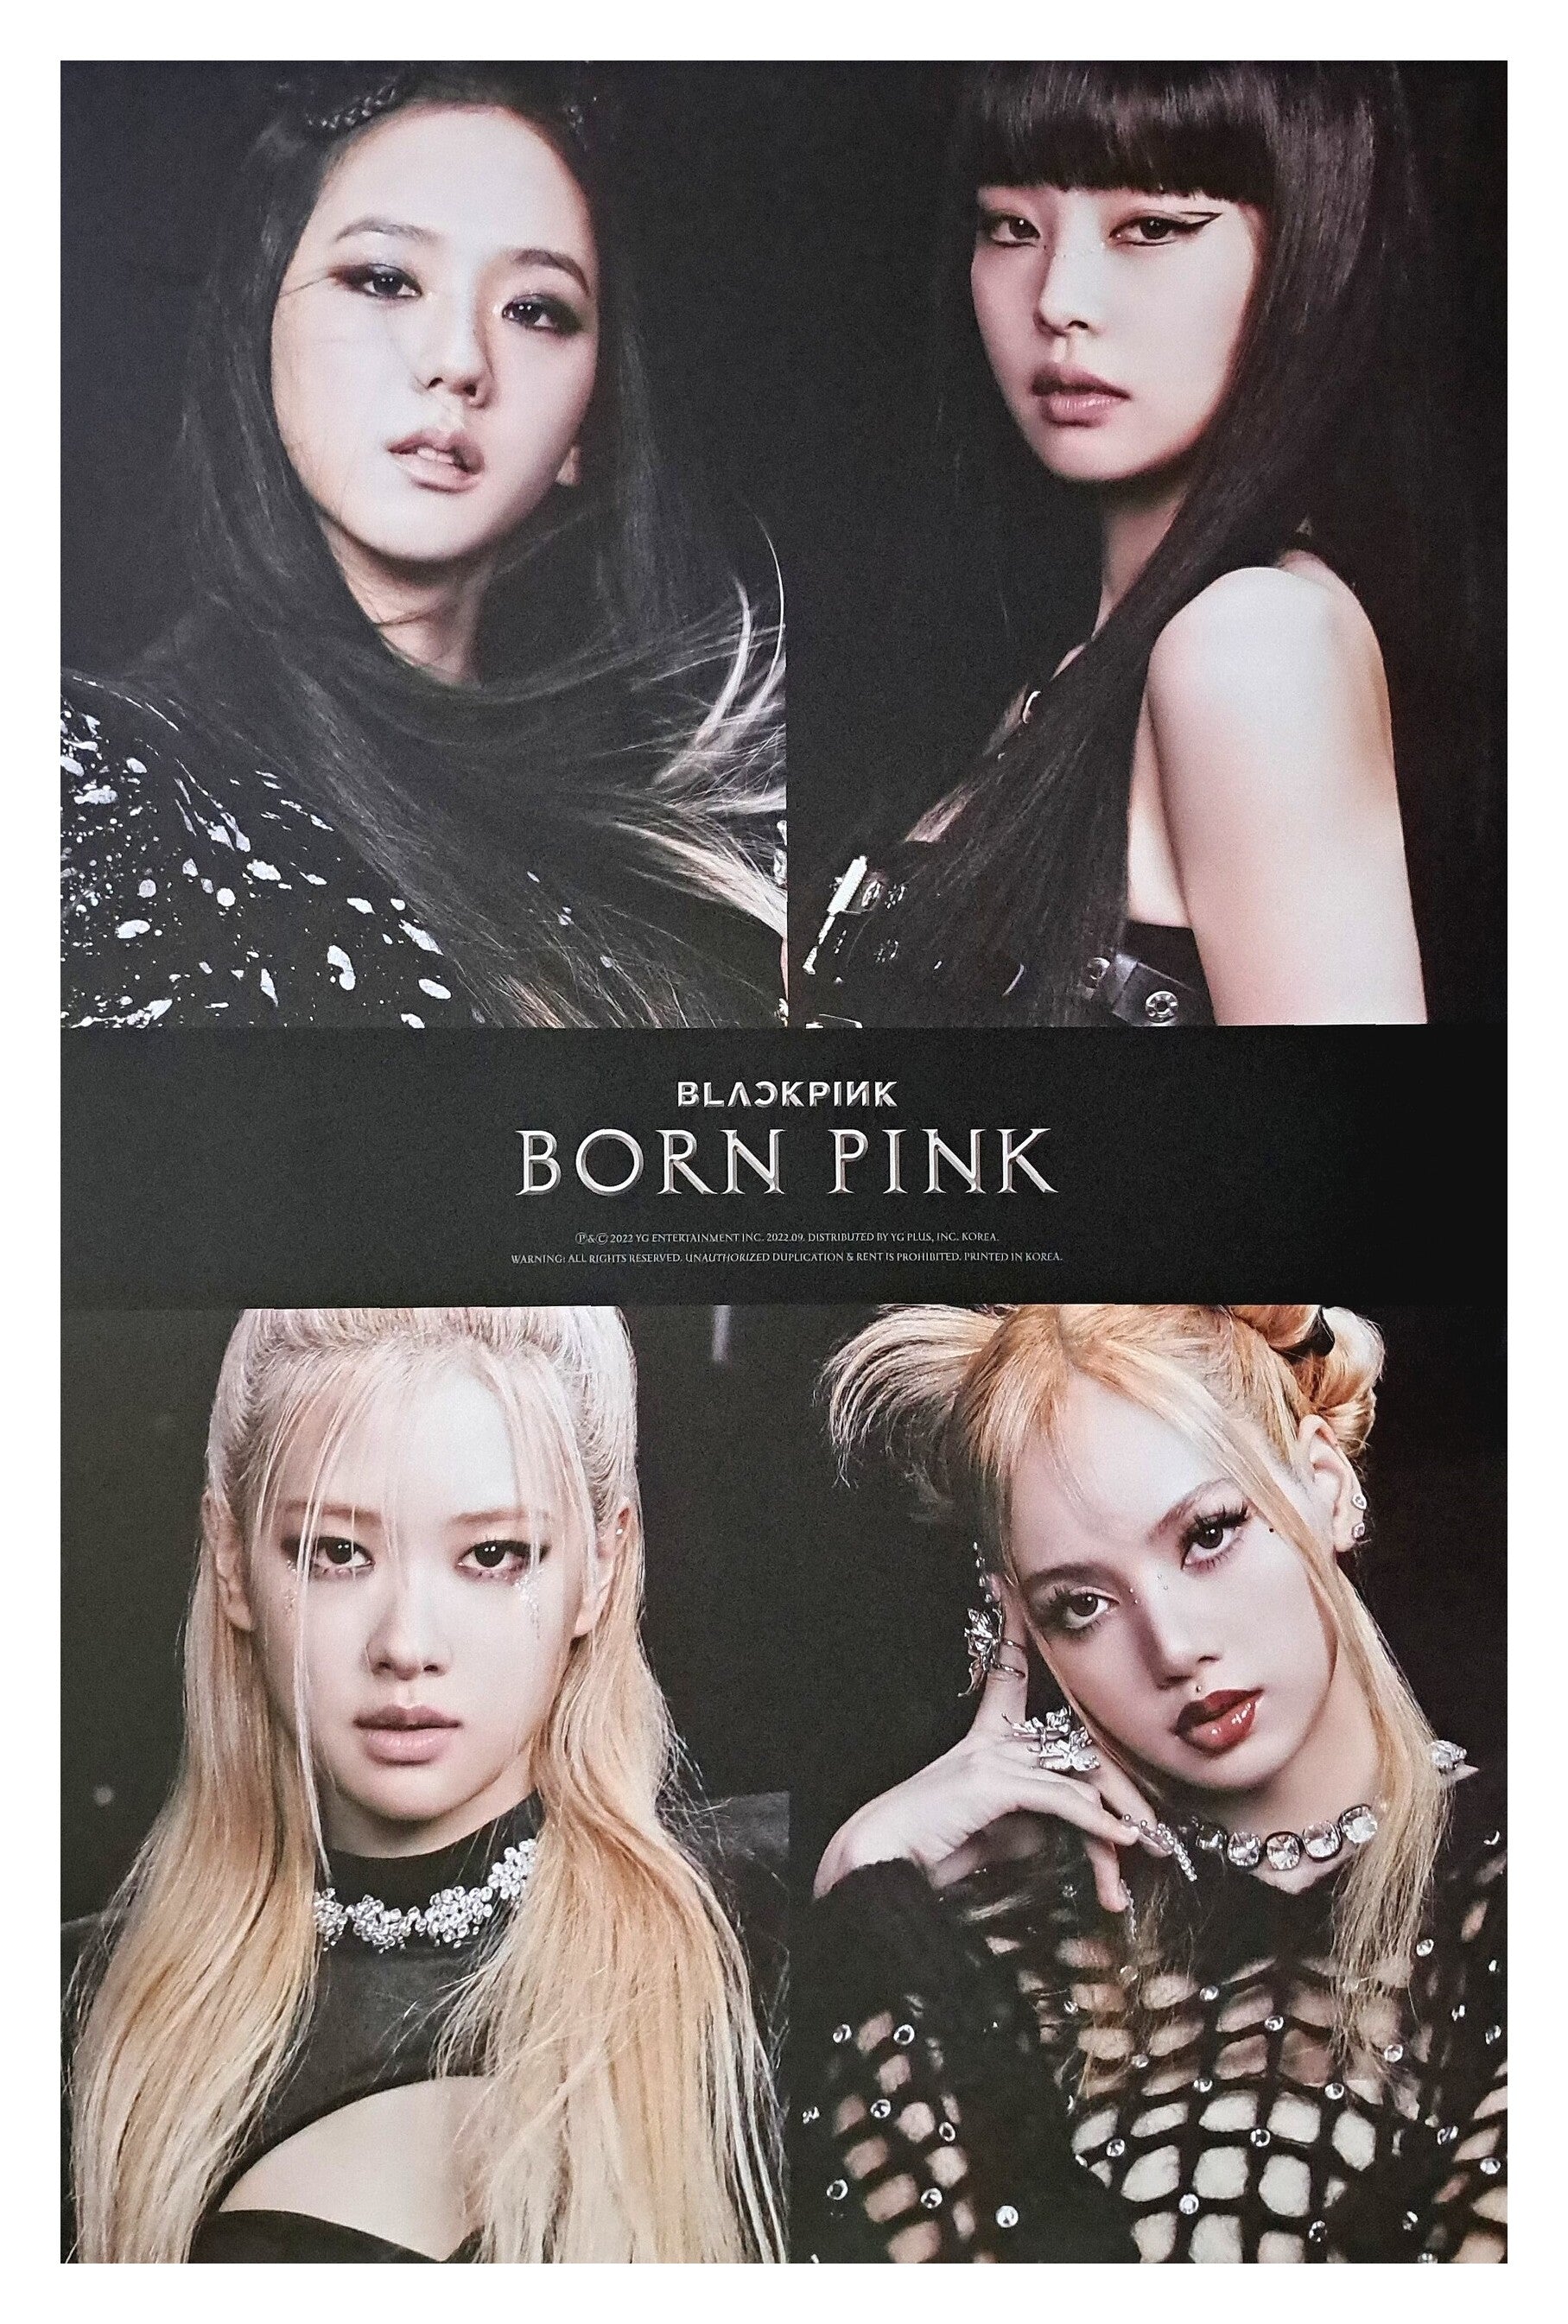 Blackpink 2nd Album Born Pink [Box Set ver.] Official Poster